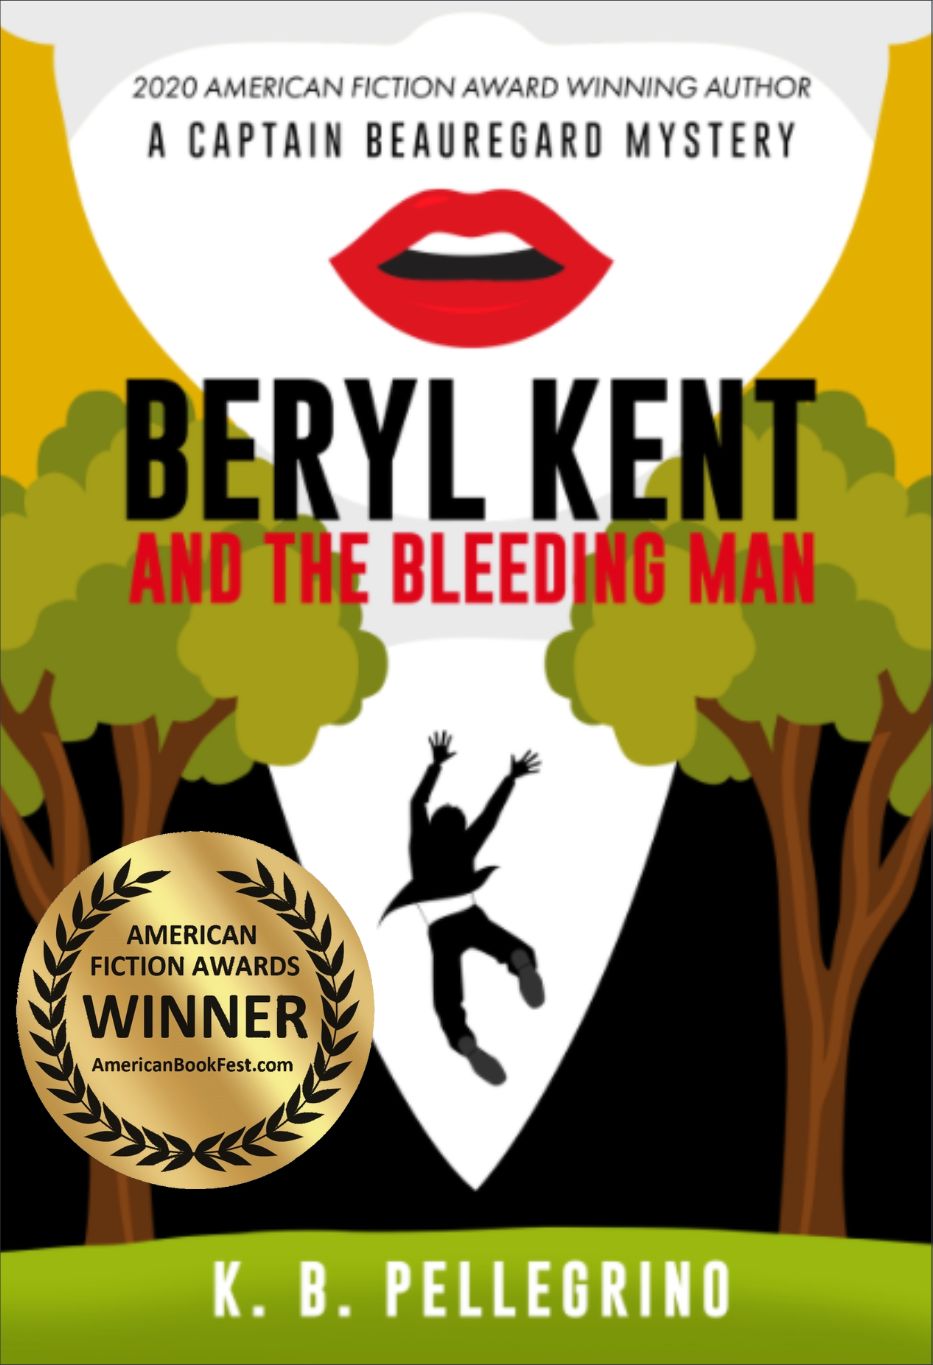 Beryl Kent and the Bleeding Man by K.B. Pellegrino wins 2022 American Fiction Award